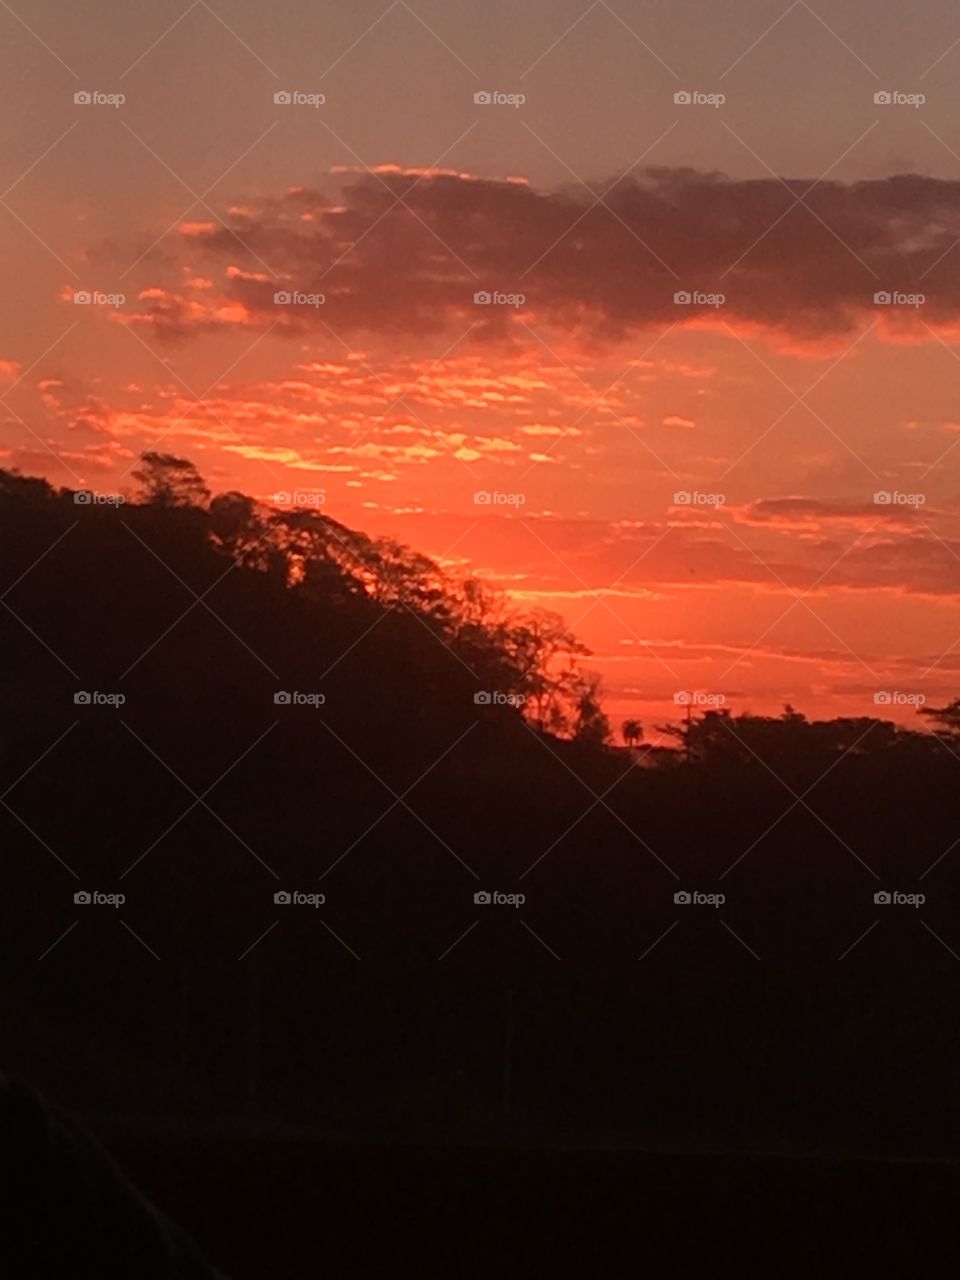 Sunset in Minas Gerais - Brazil